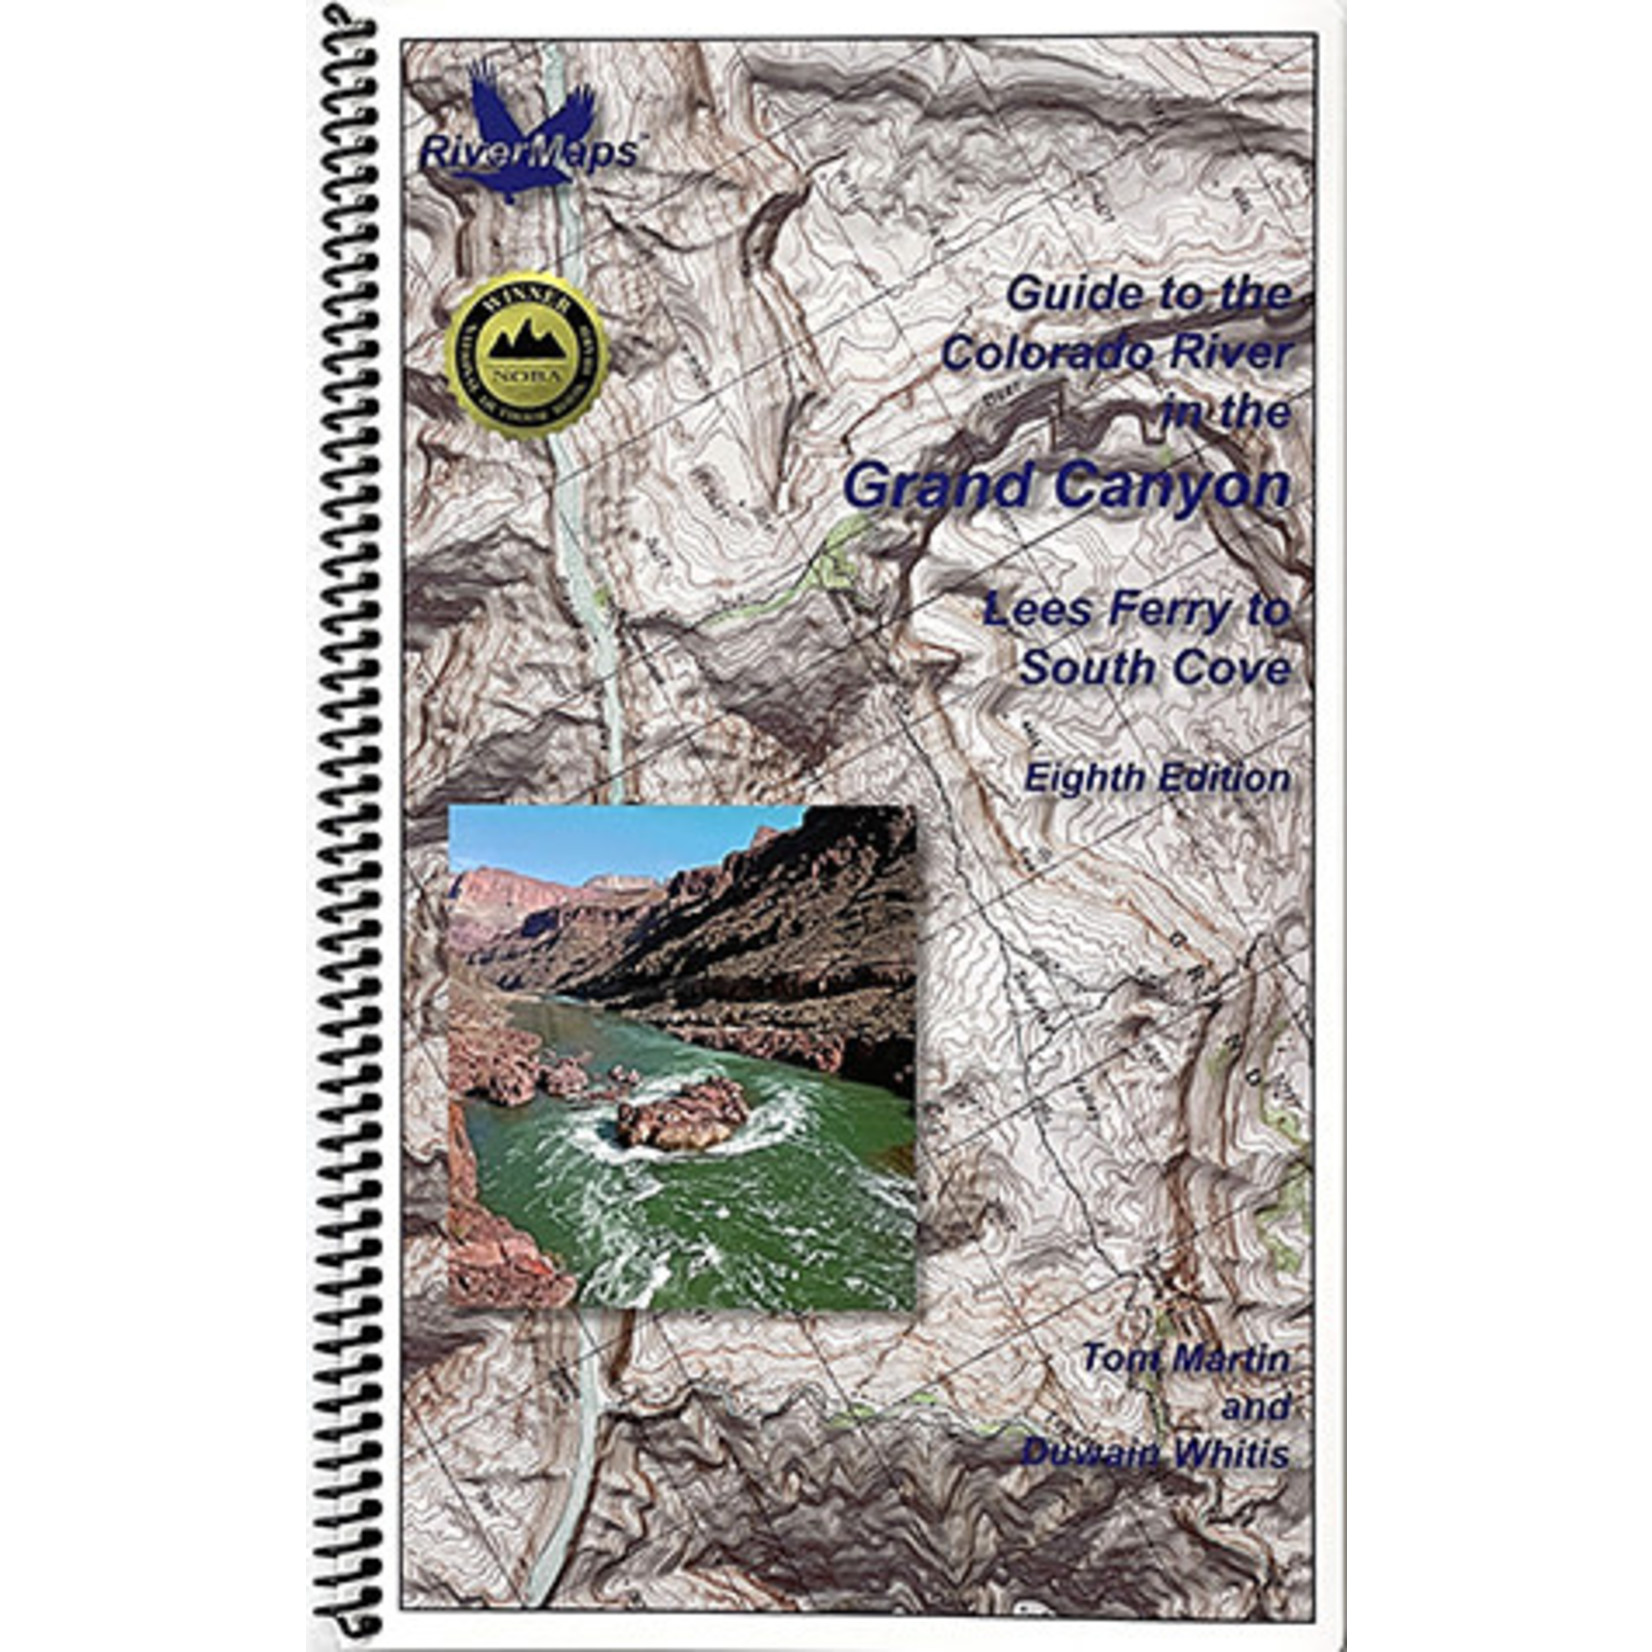 Rivermaps RiverMaps Colorado River in the Grand Canyon 8th Ed. Guide Book